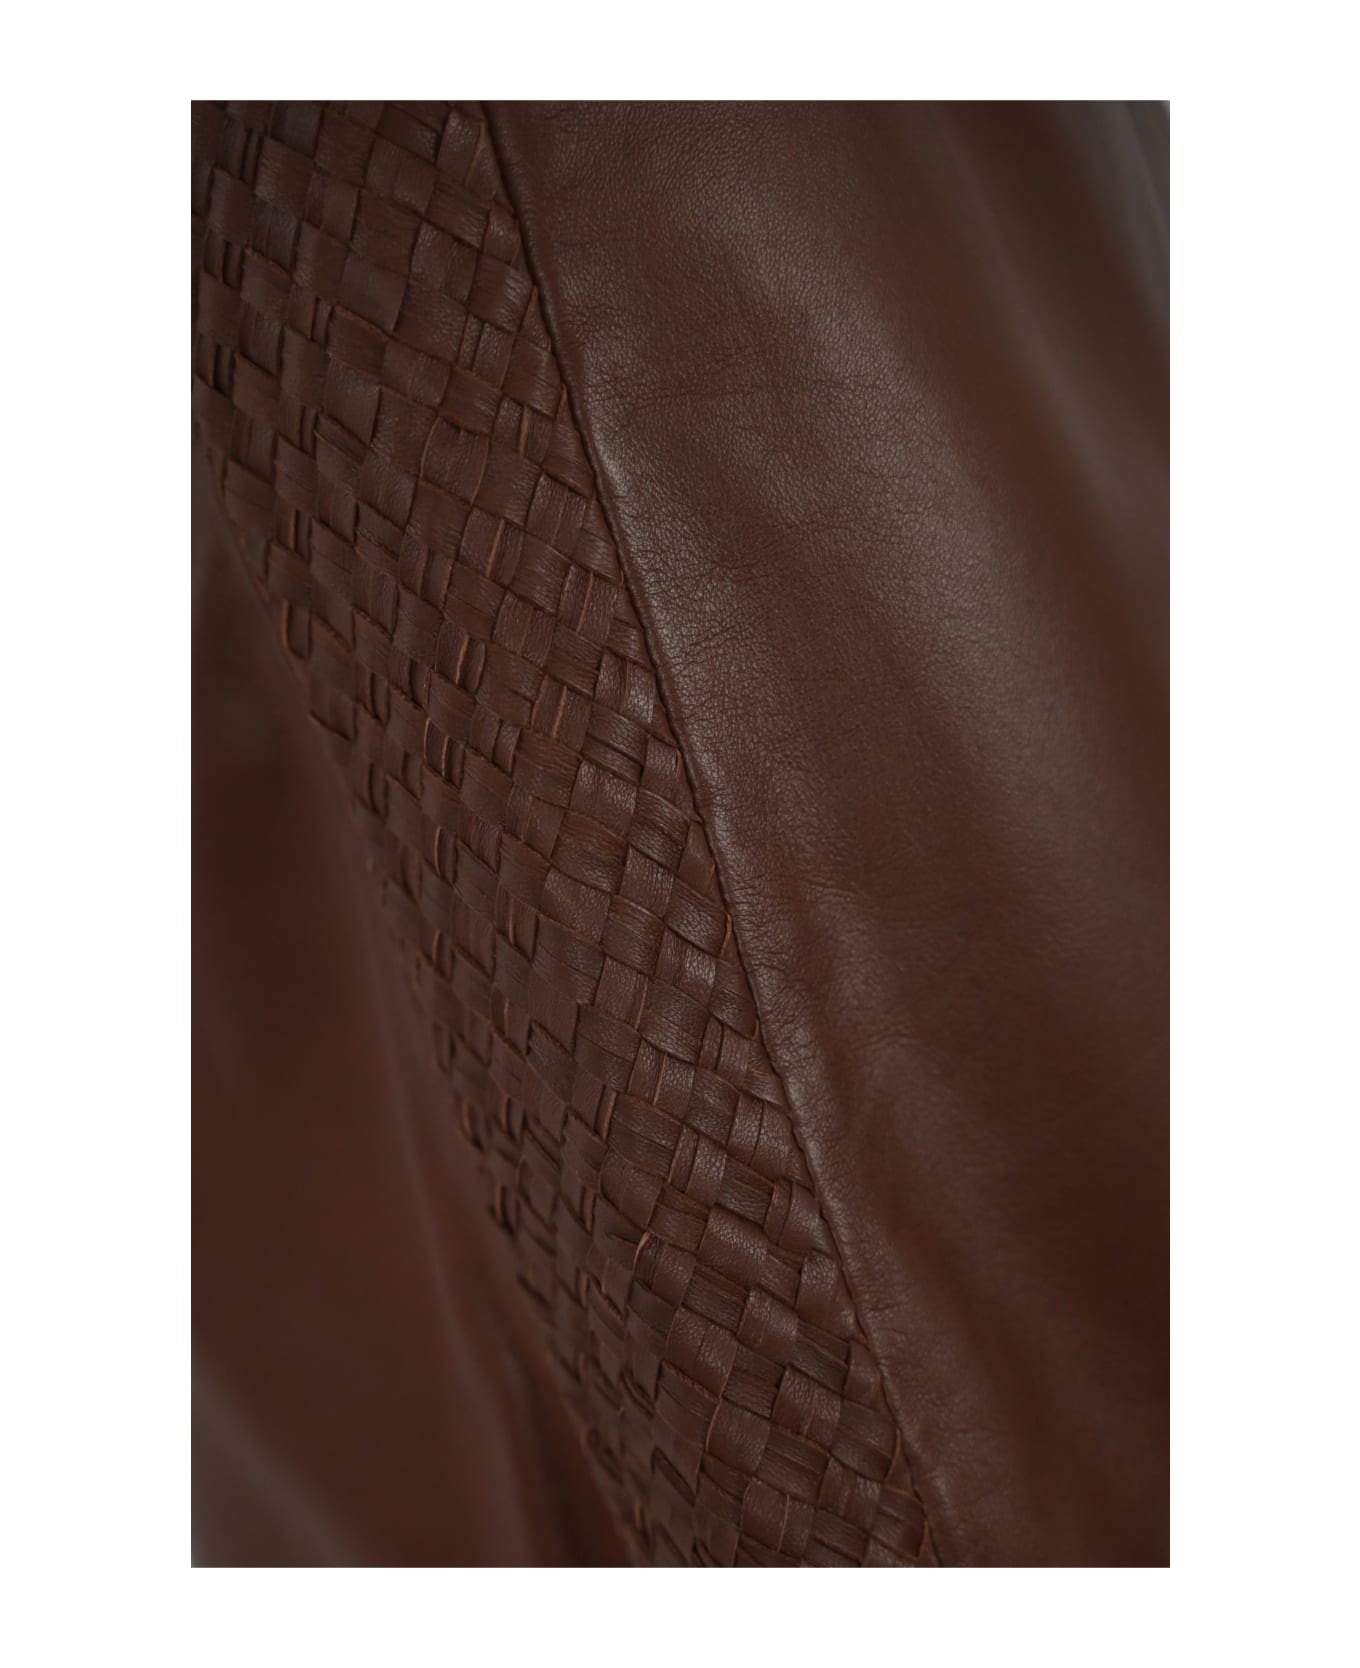 Weekend Max Mara "ocra" Nappa Leather Skirt - Coccio